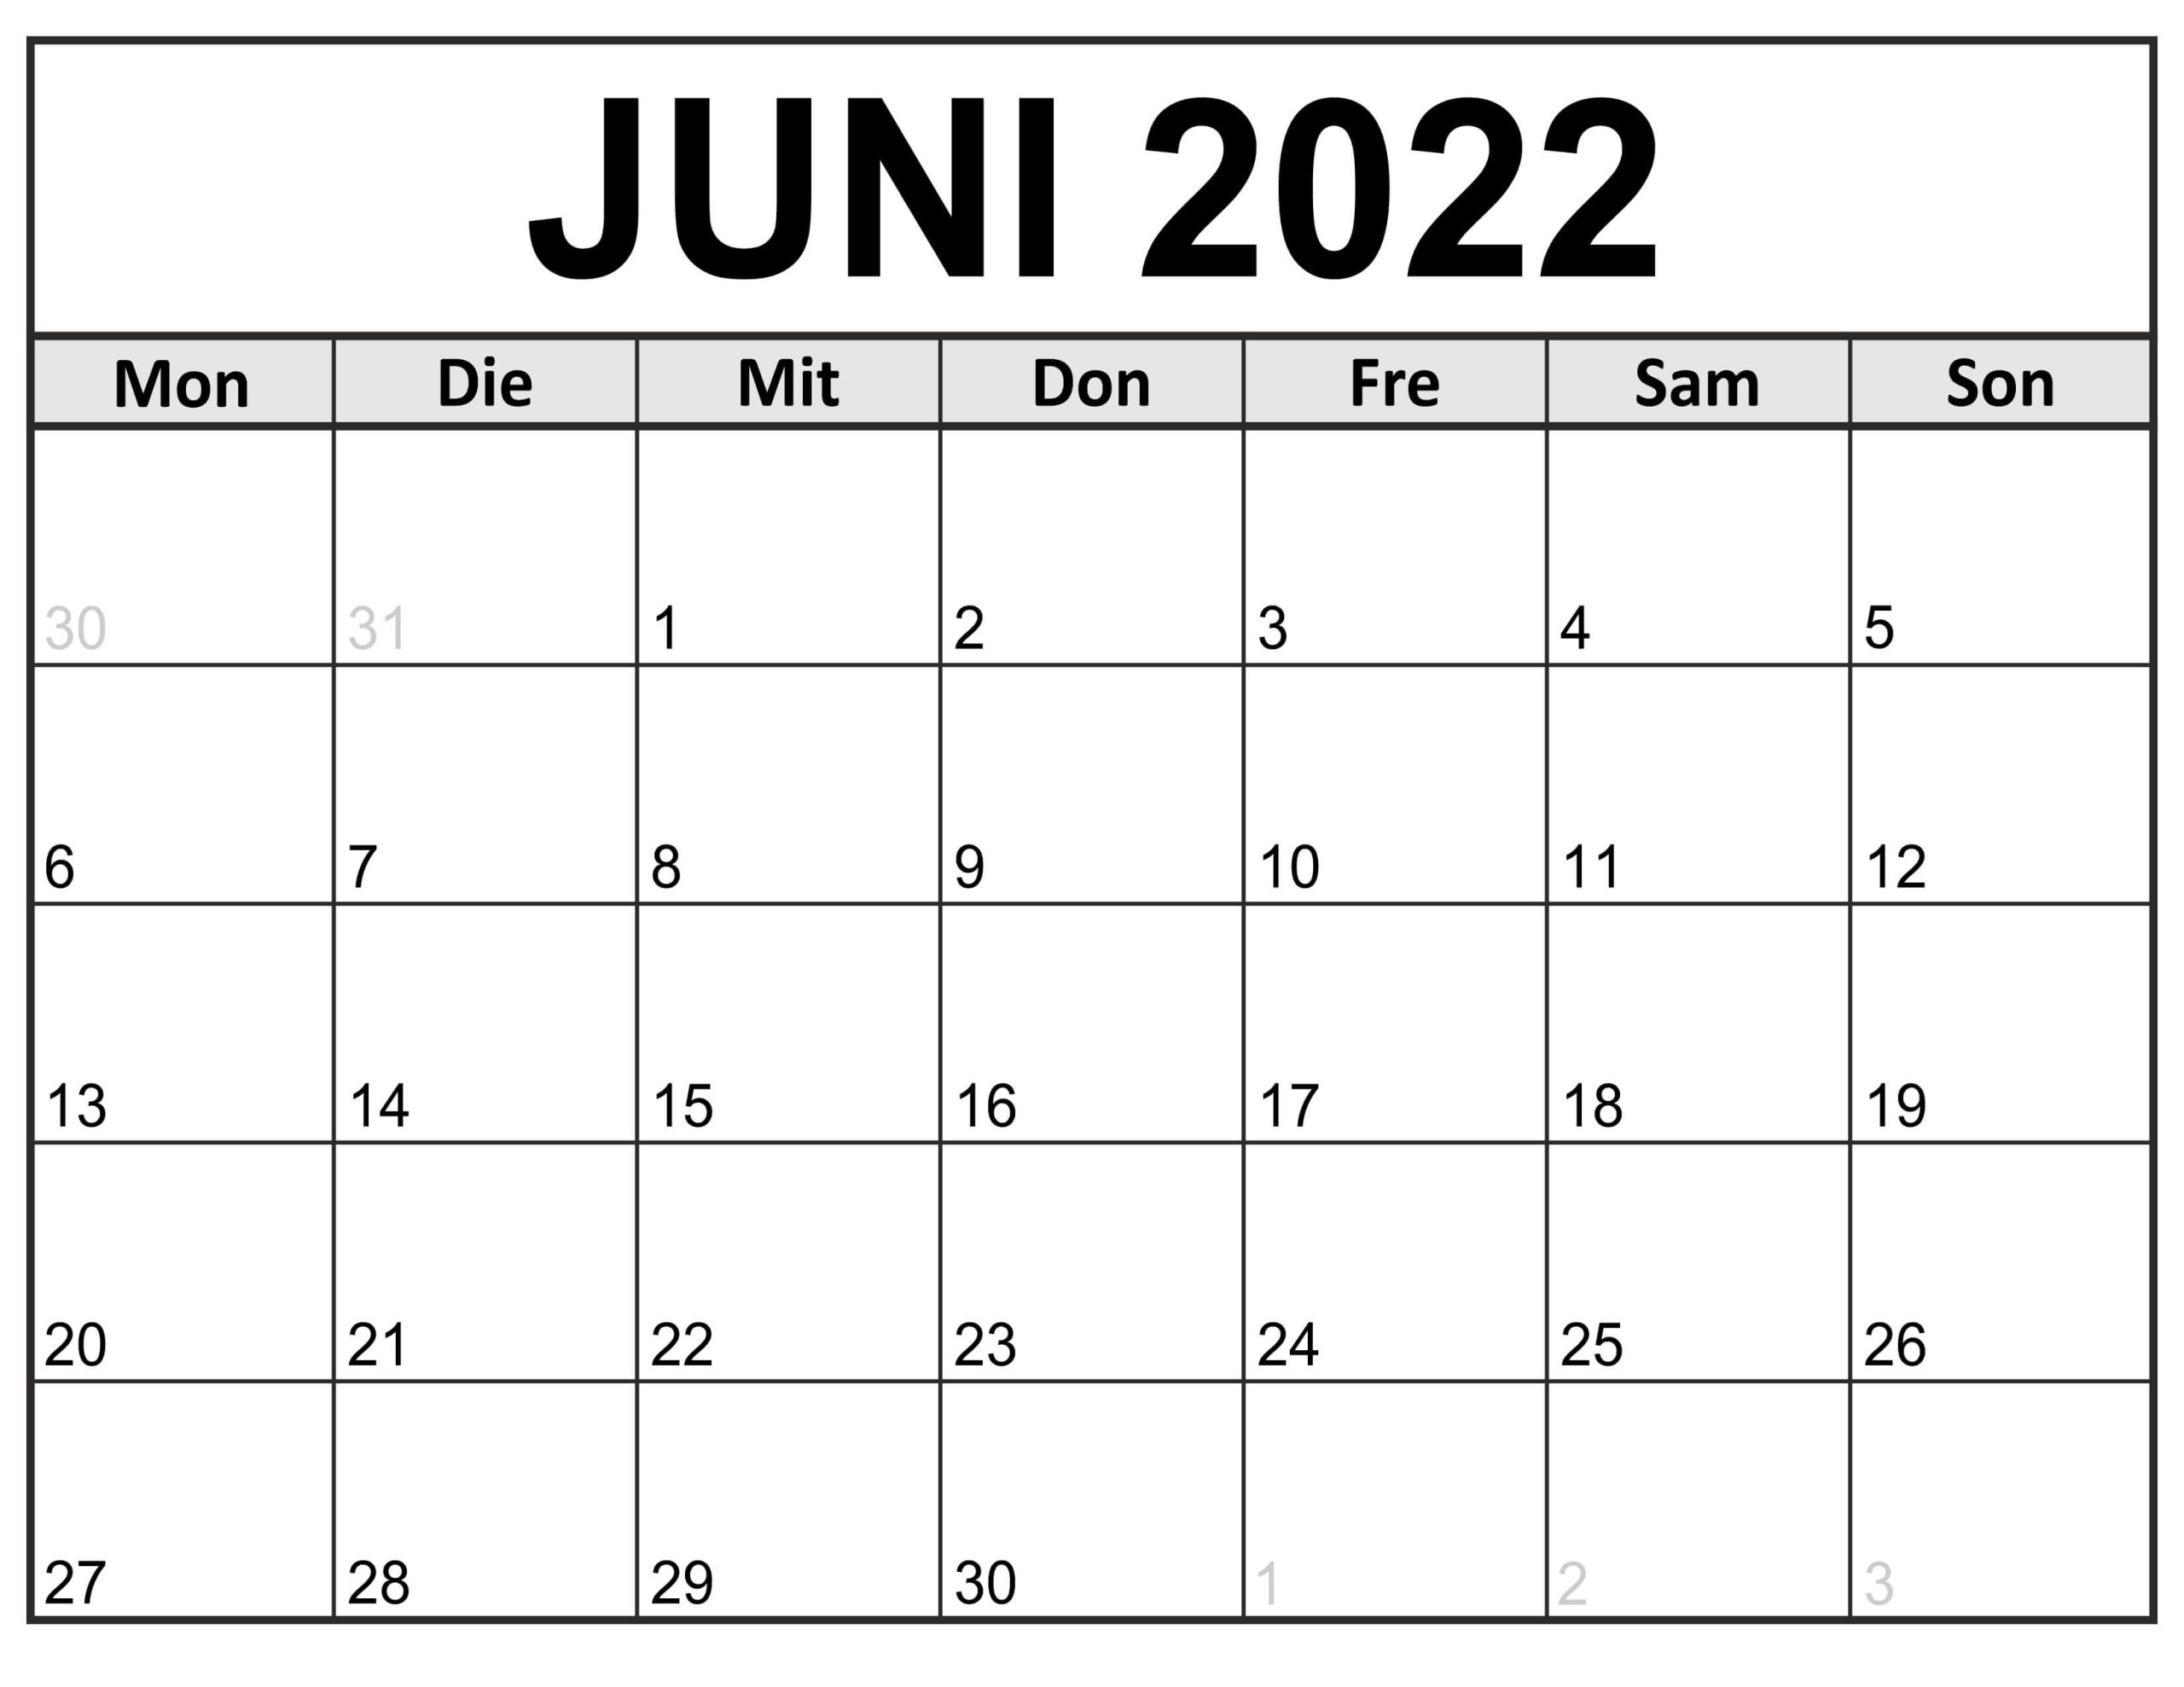 Kalender Juni 2022